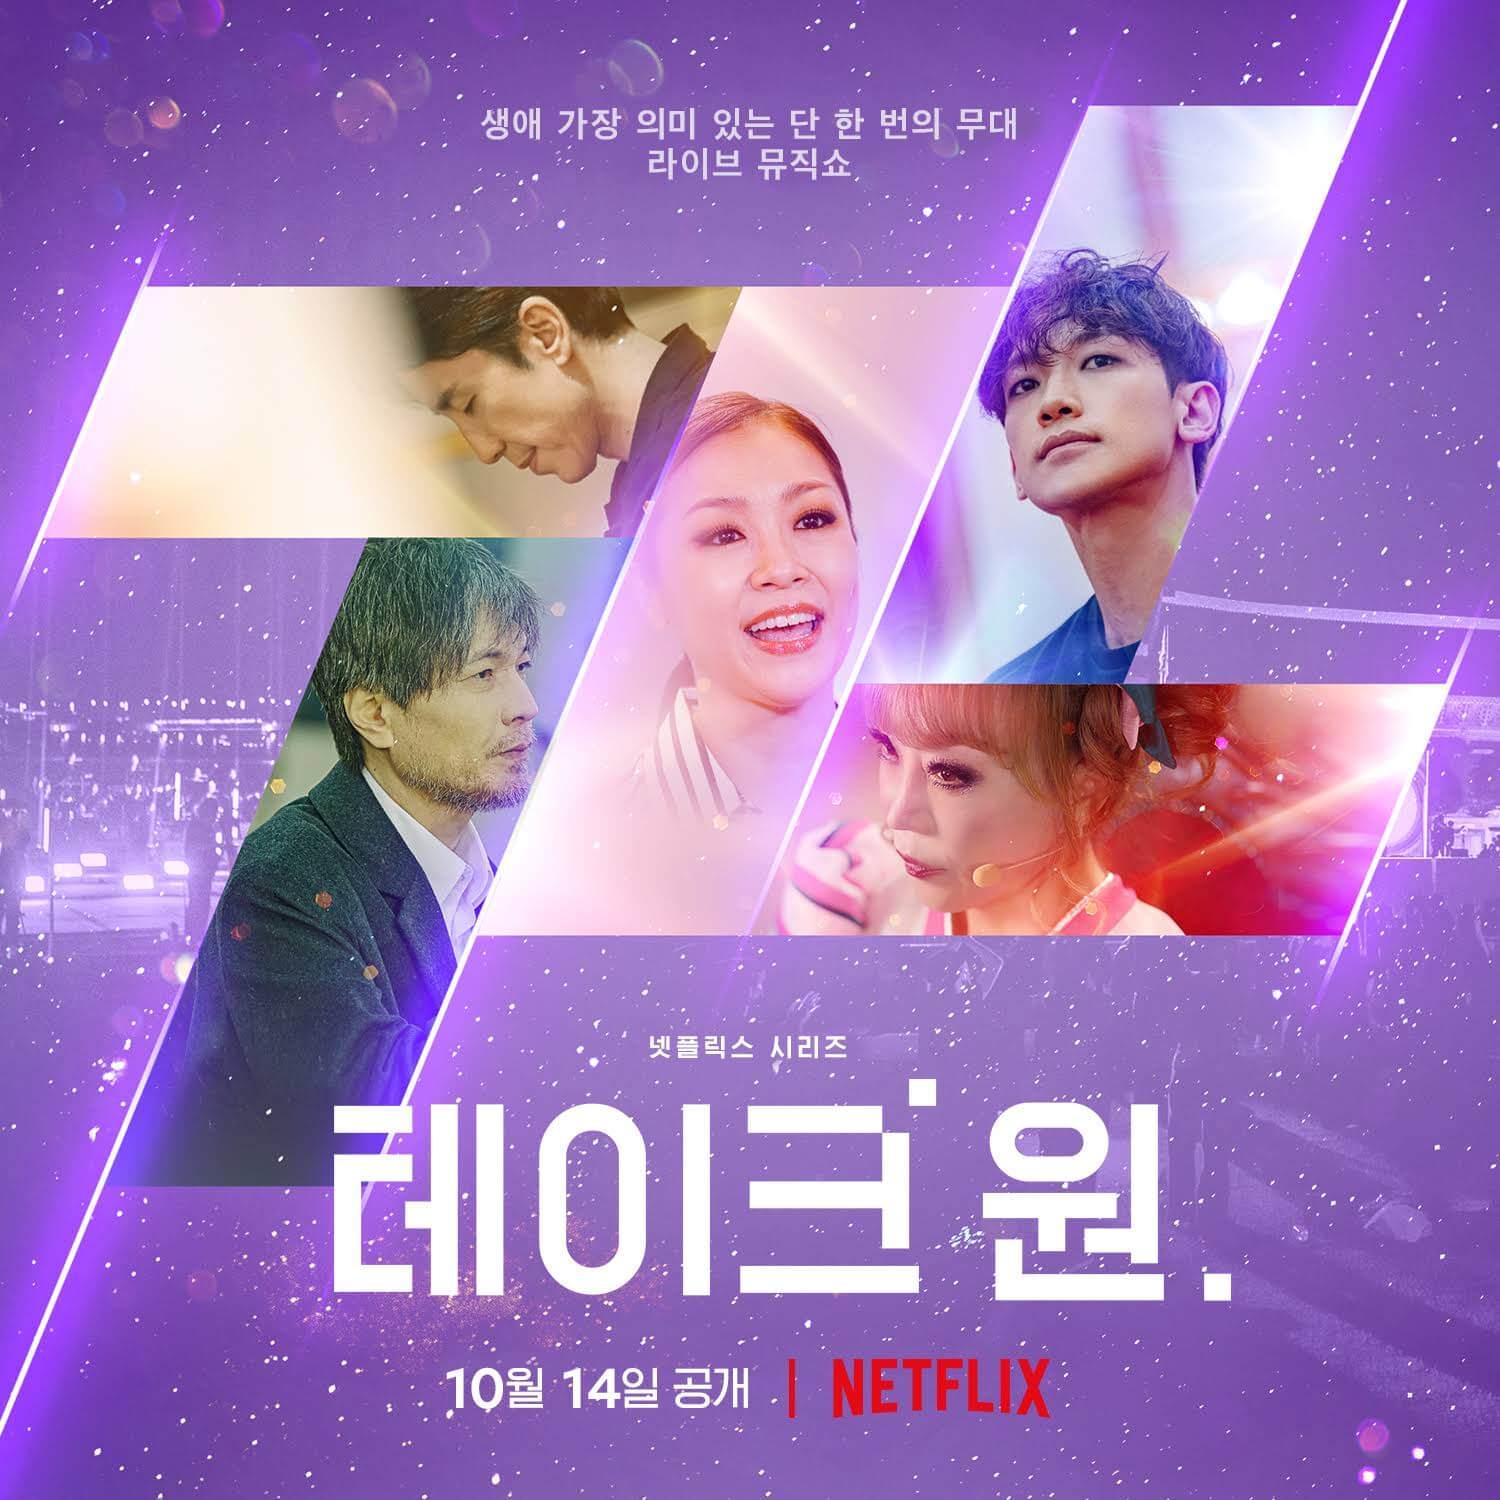 el programa de variedades de música coreana toma 1 llegará al póster 1 de netflix en octubre de 2022